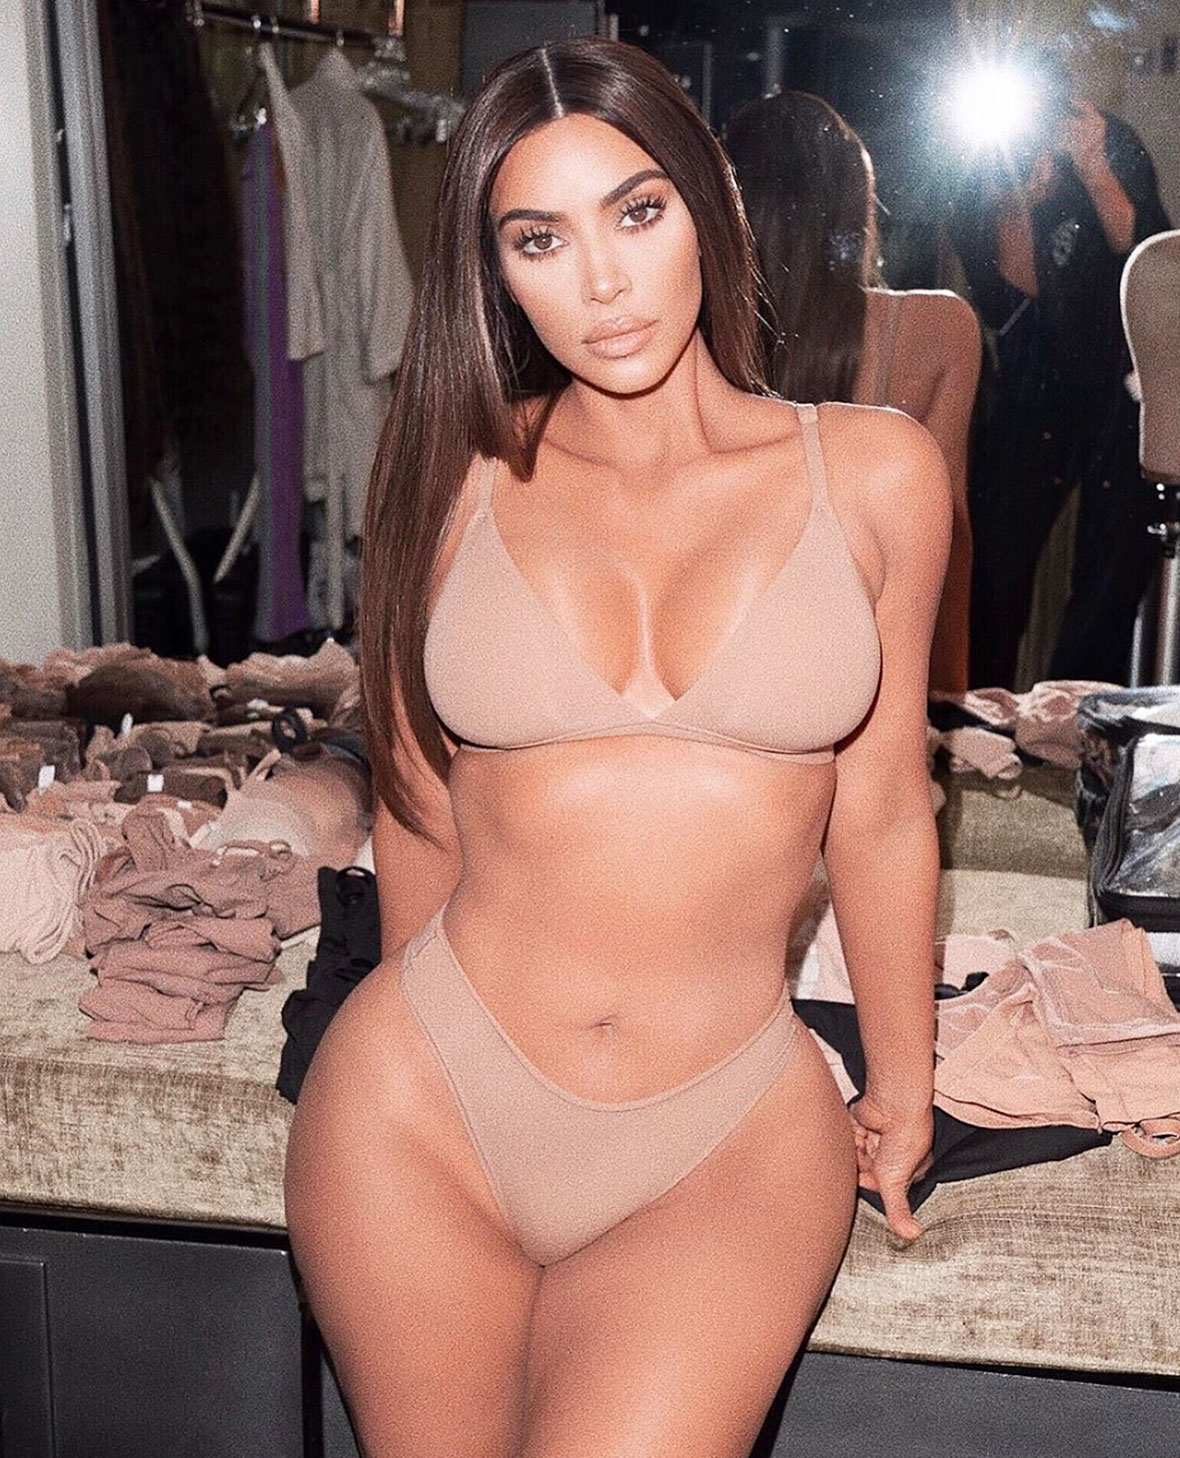 Kylie Jenner wears Skims bralette in sultry new mirror selfies